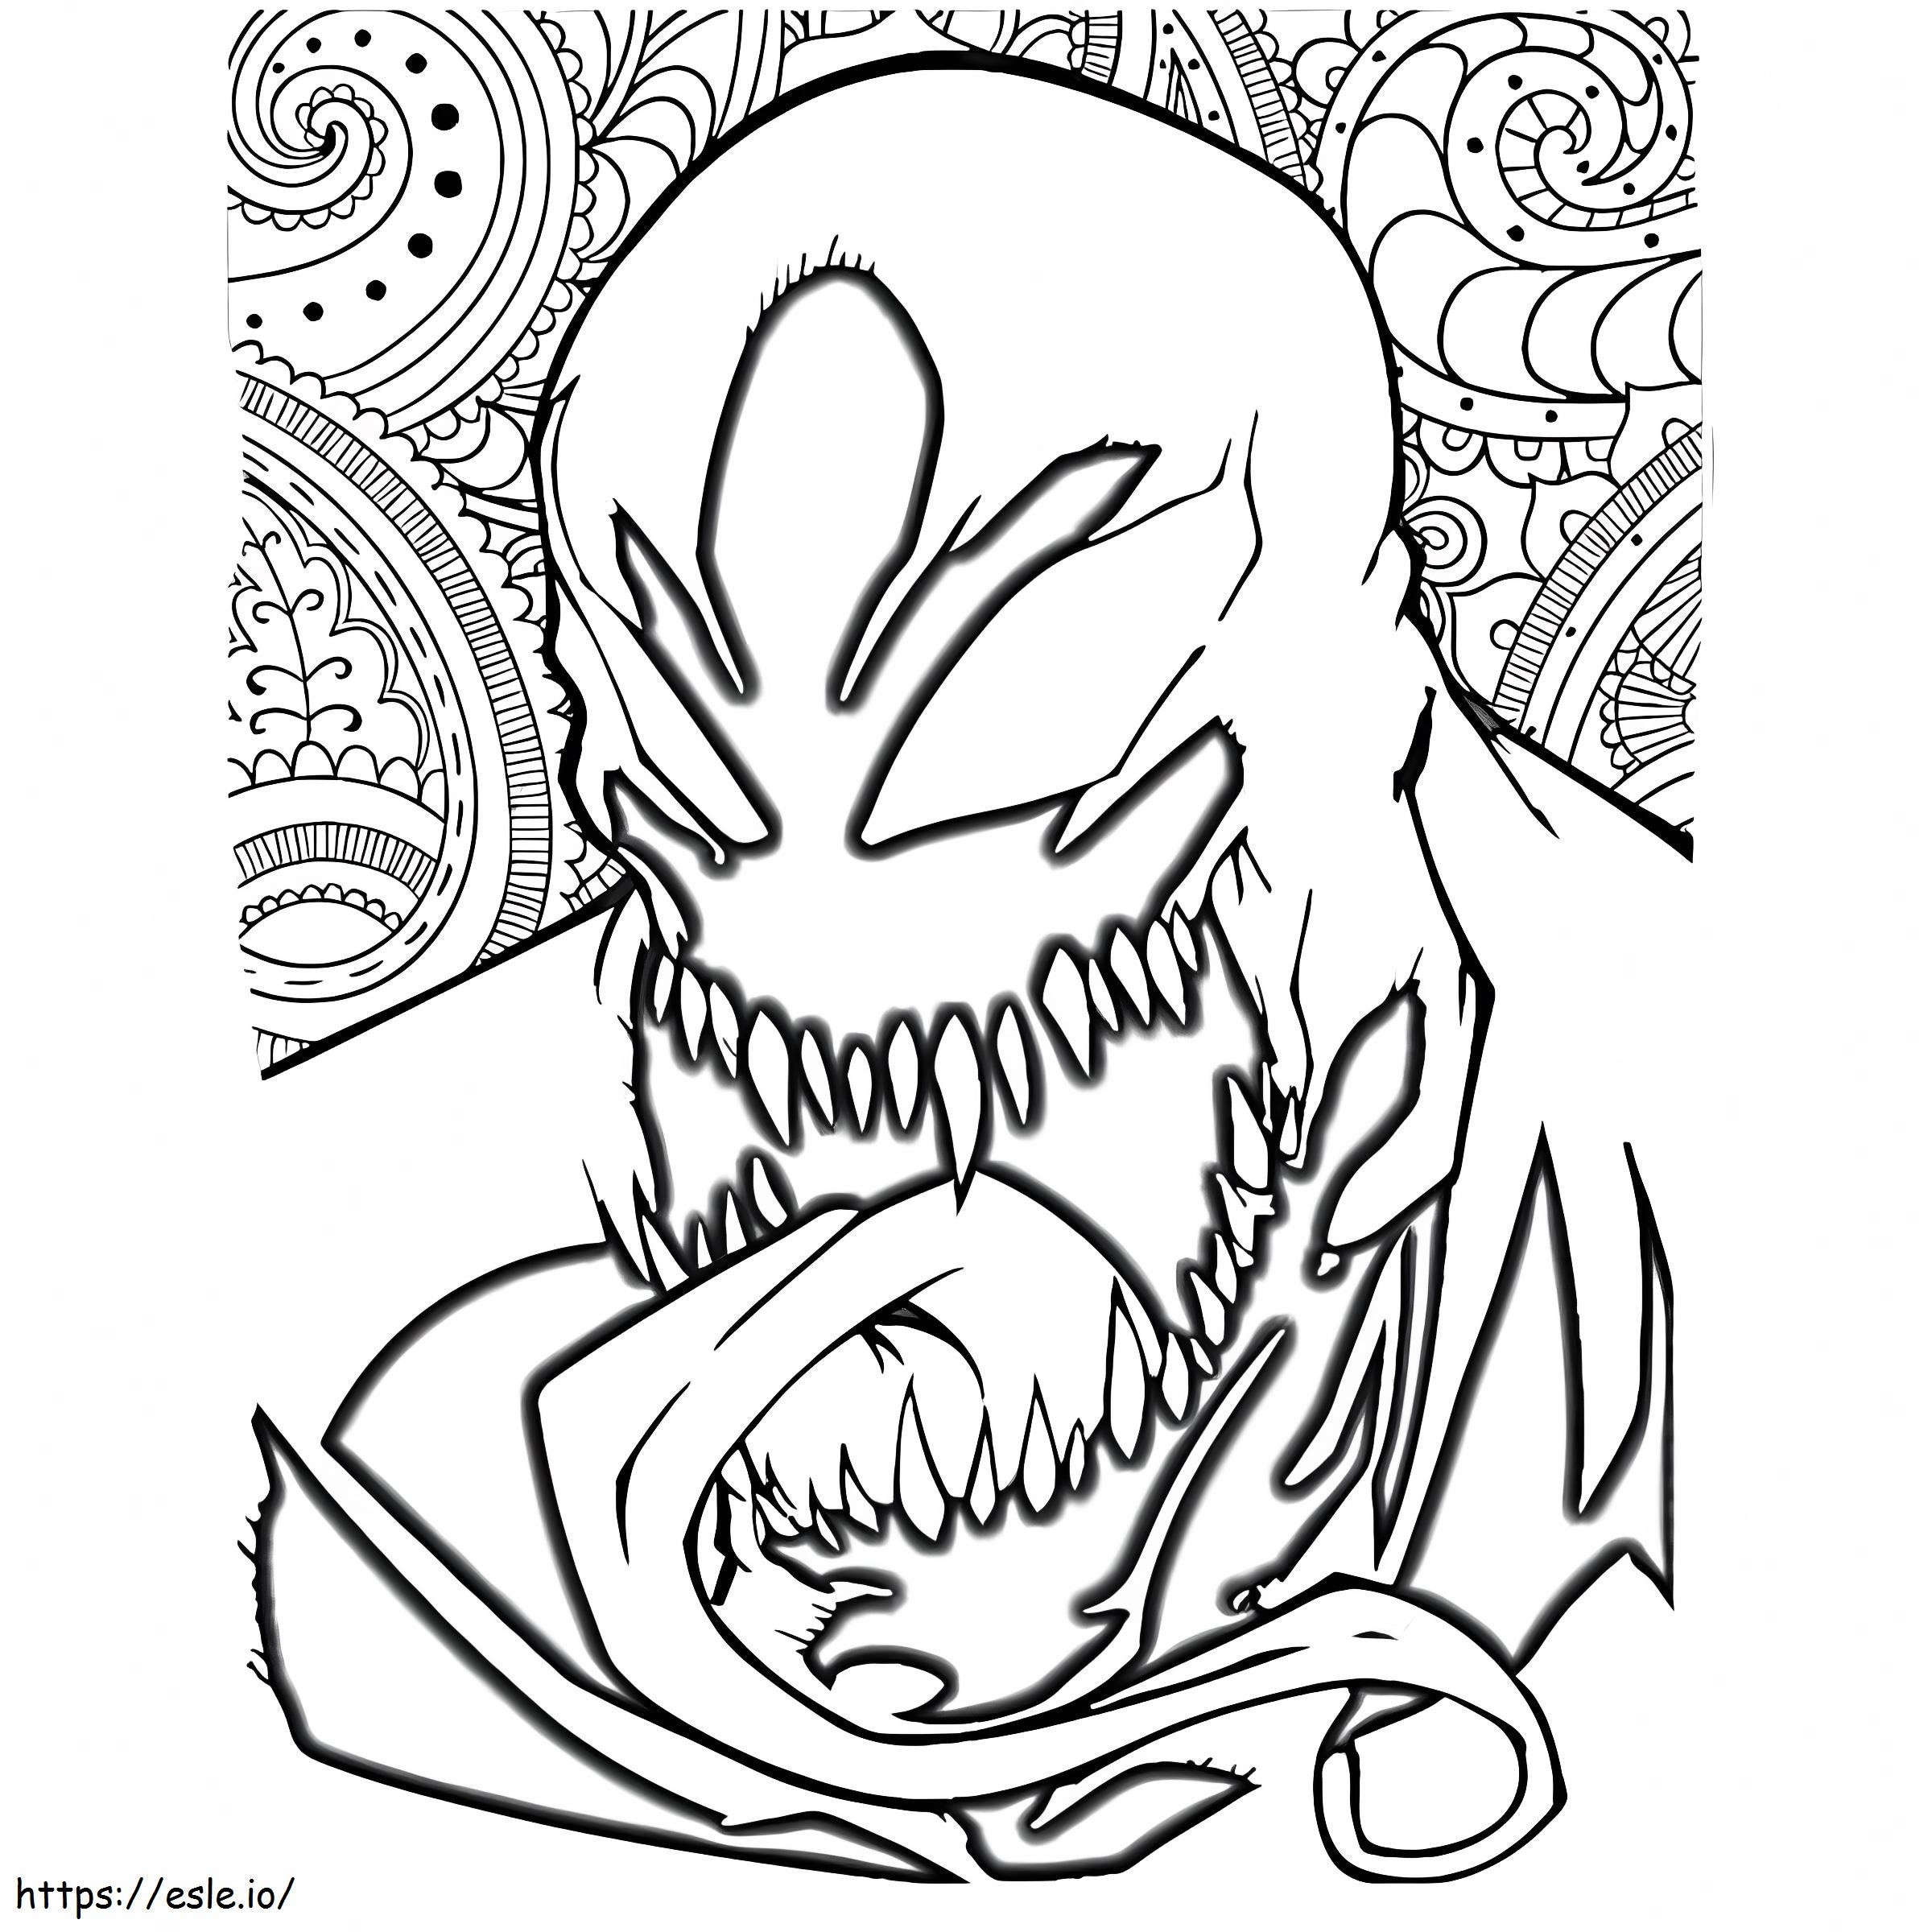 Complex Venom coloring page